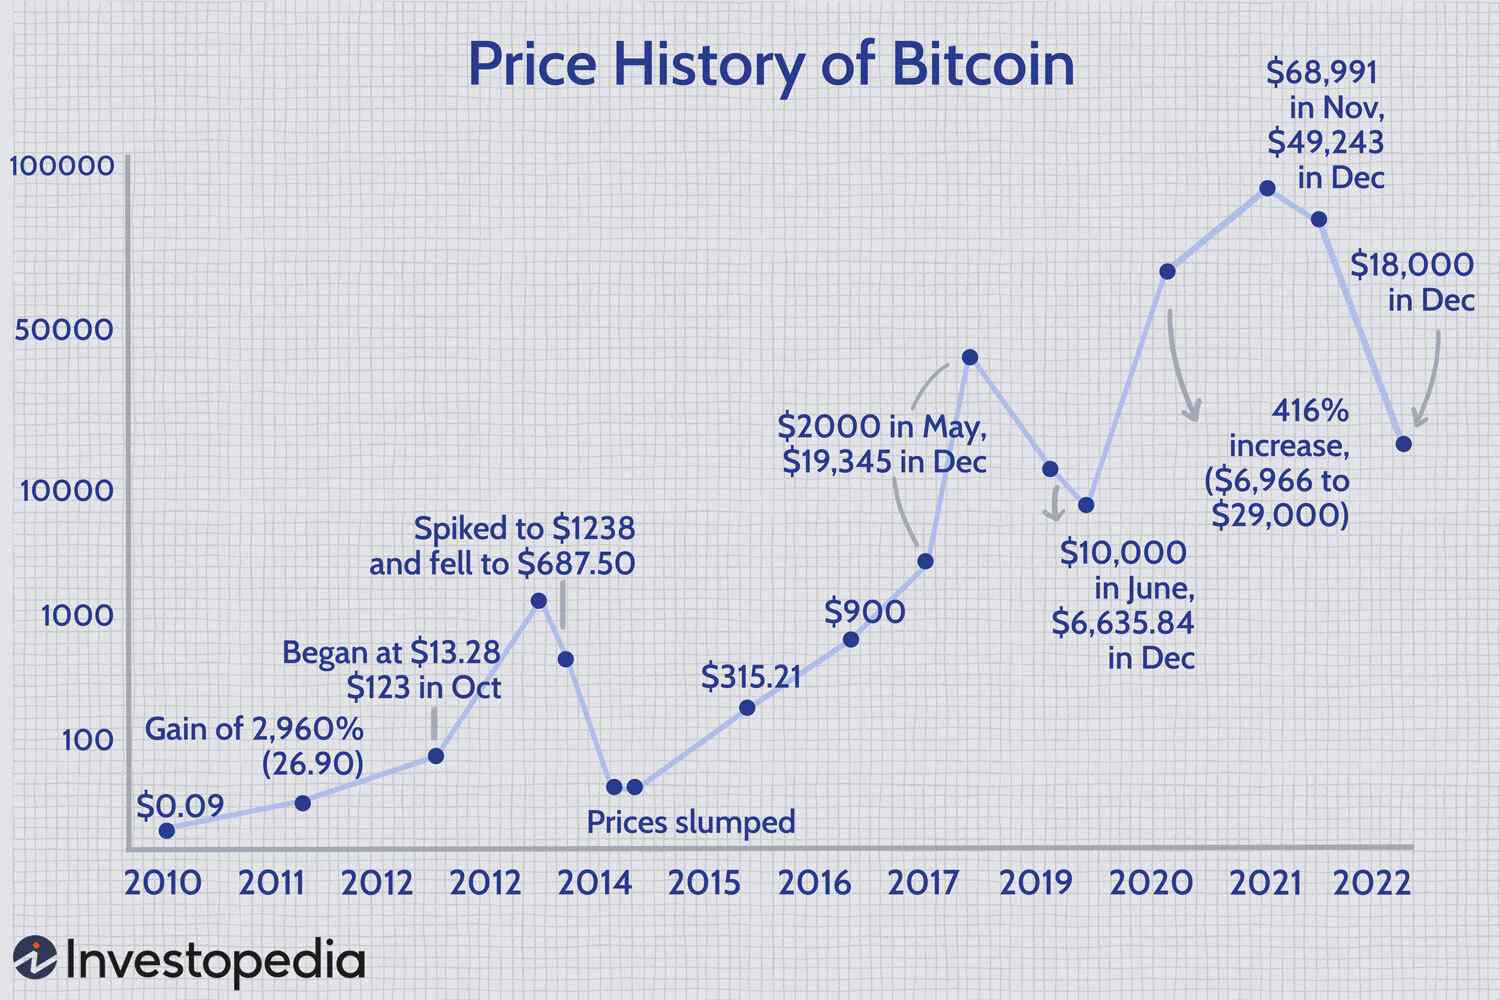 bitcoin today: Bitcoin's renewed euphoria as price keeps rising - The Economic Times